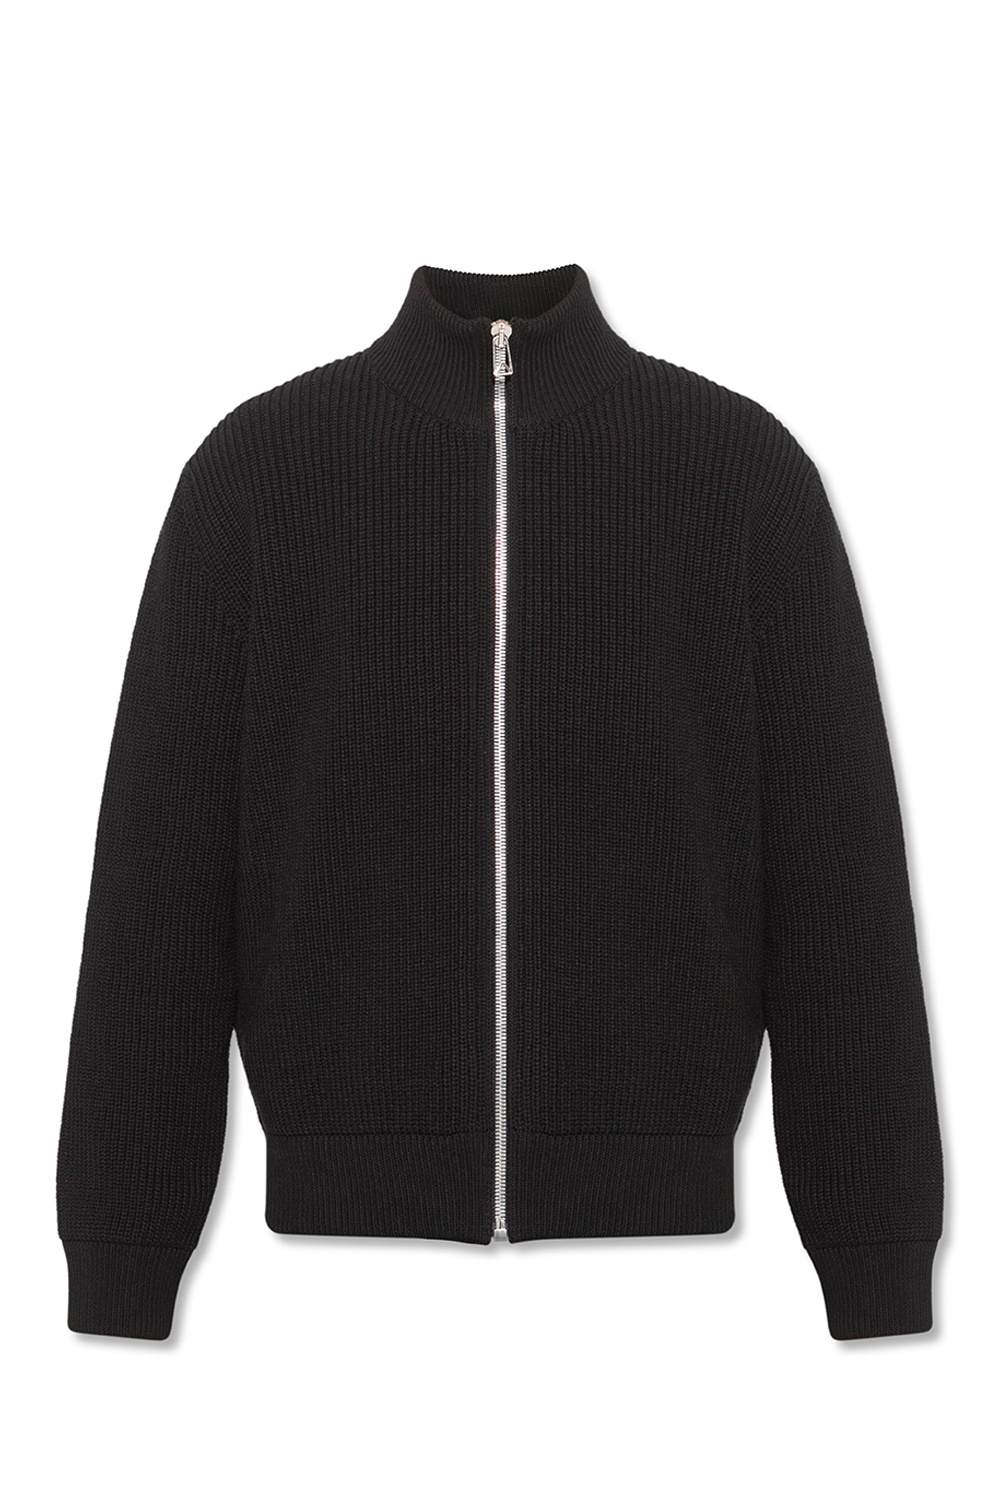 Louis VUITTON White Zipper Cotton Jacket Sweater Cardigan Italy L Large 6 7  8